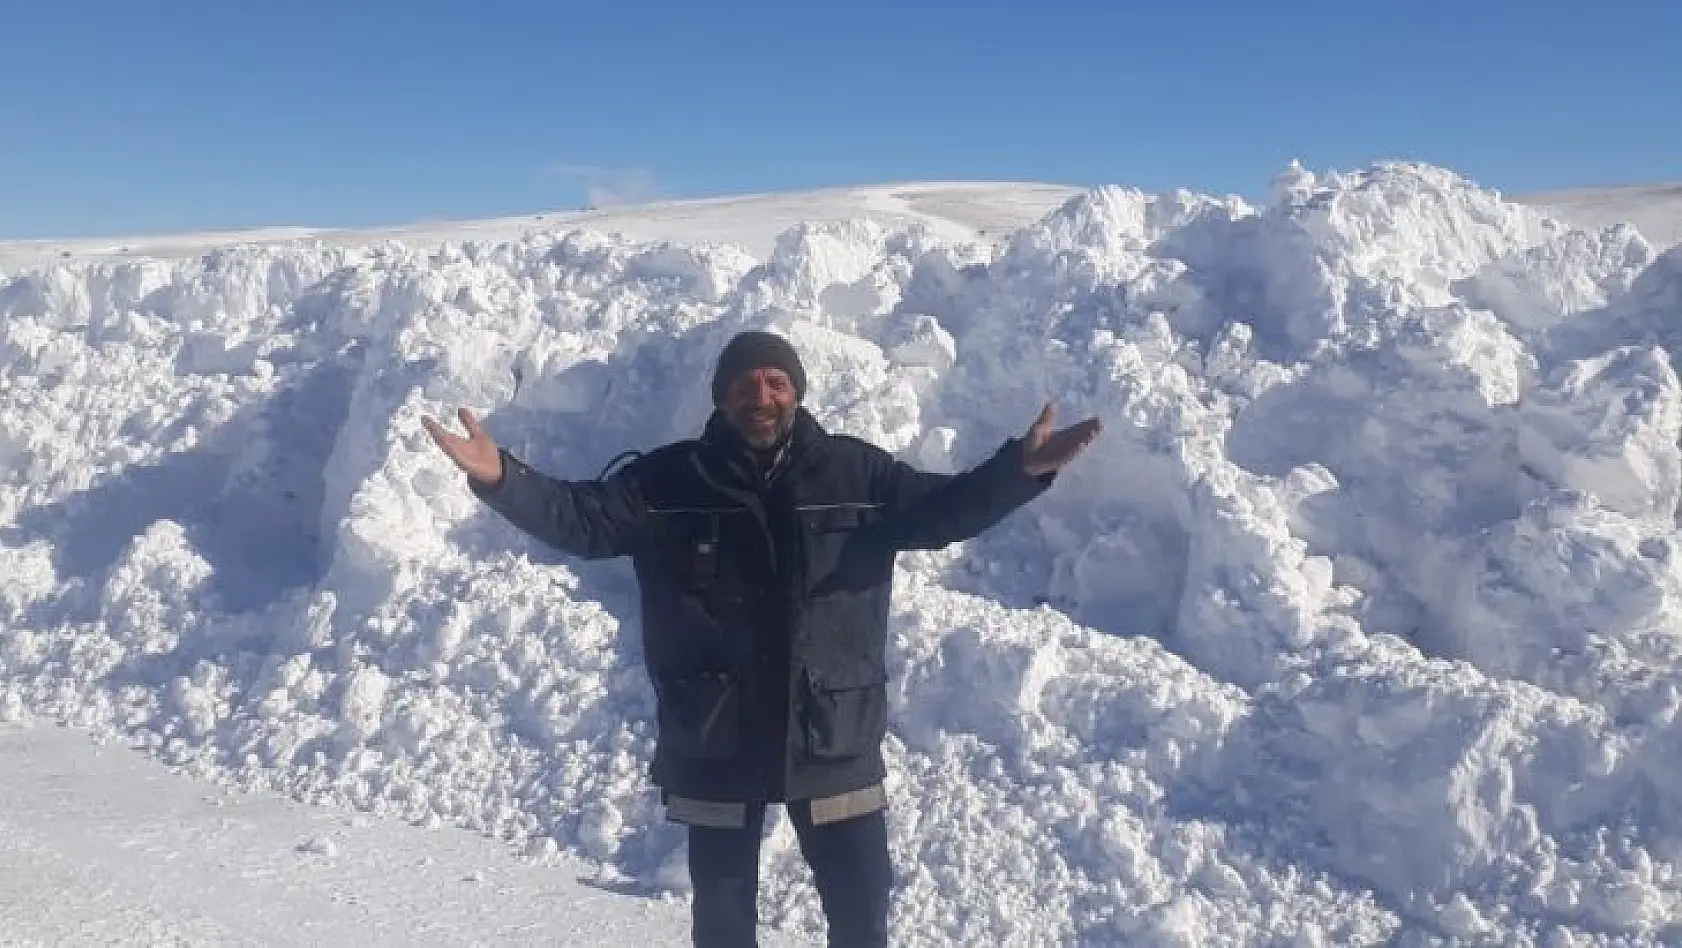 Malatya'da çiftçilerden kar sevinci